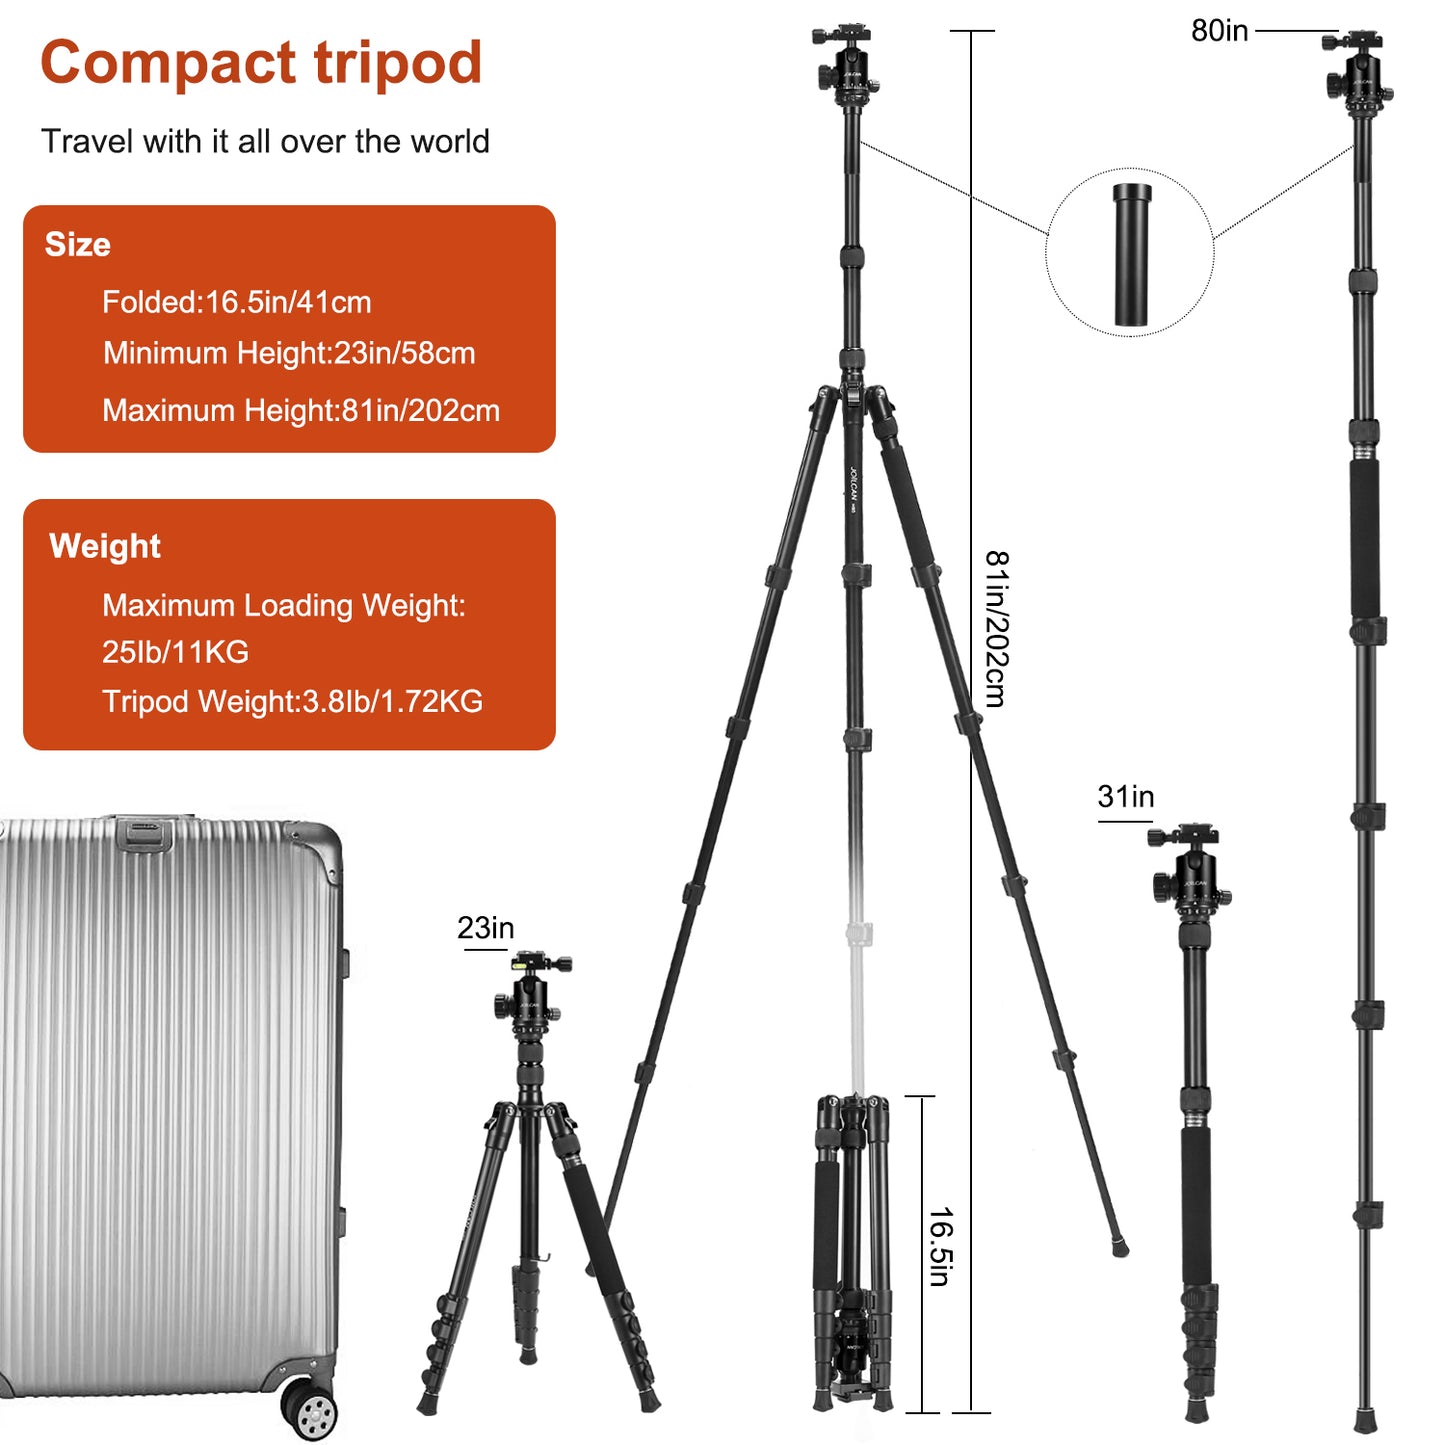 JOILCAN 81’’ Tripod, Aluminum Camera Tripod for DSLR, Compact Tripod Monopod with 2 Quick Release Plates, 16.5’’ When Folded, 25 lbs Loads - Black